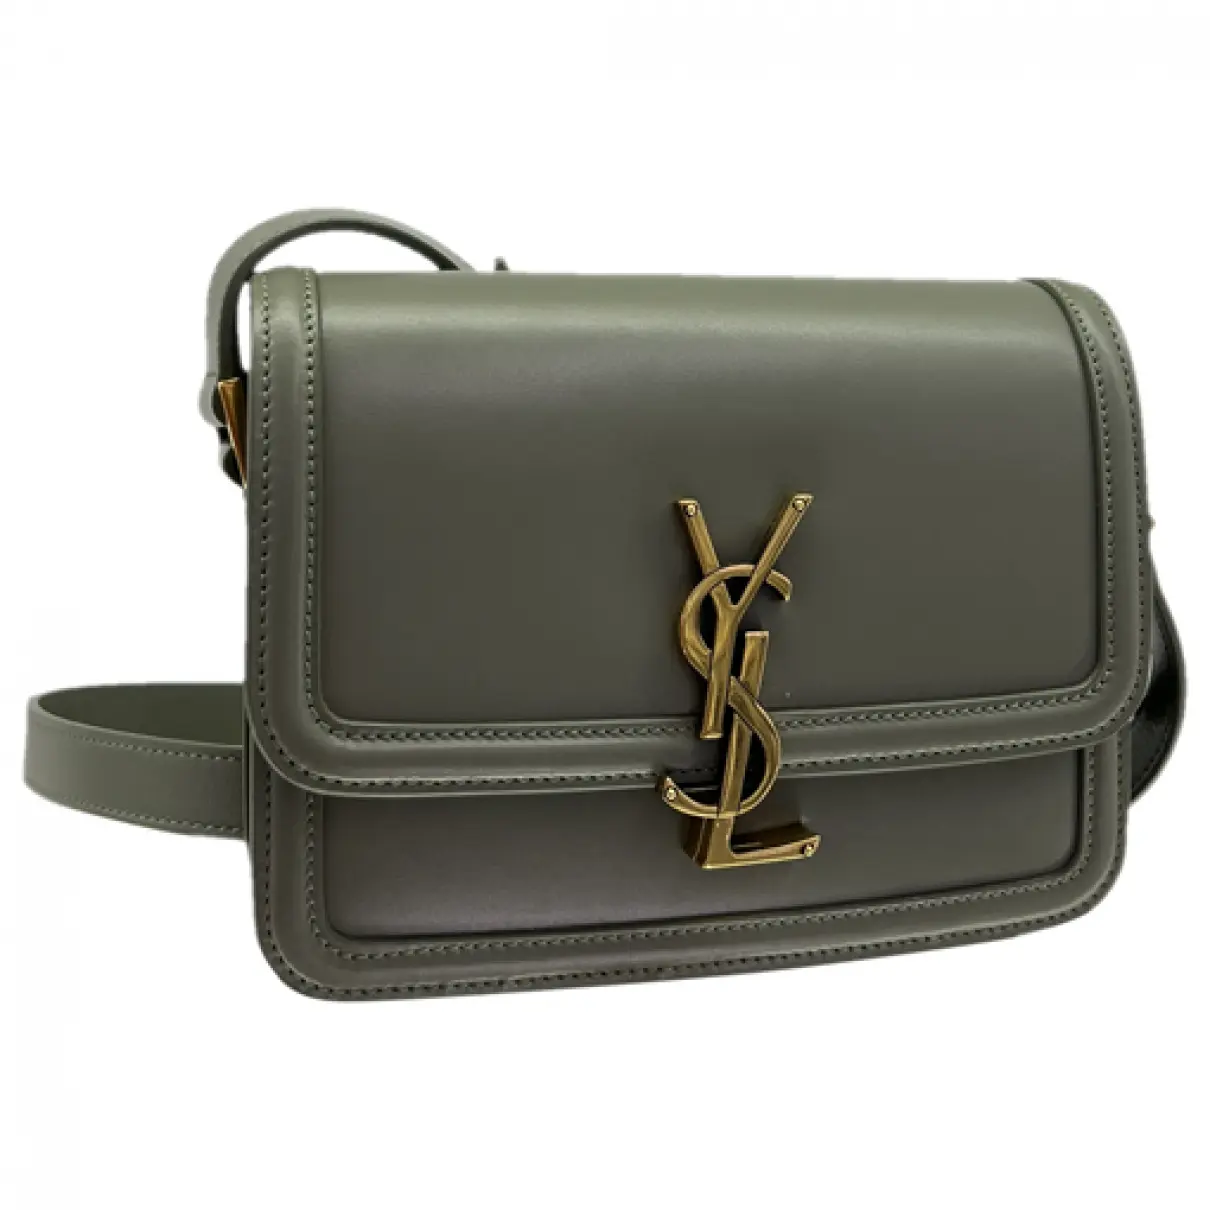 Satchel Monogramme leather handbag